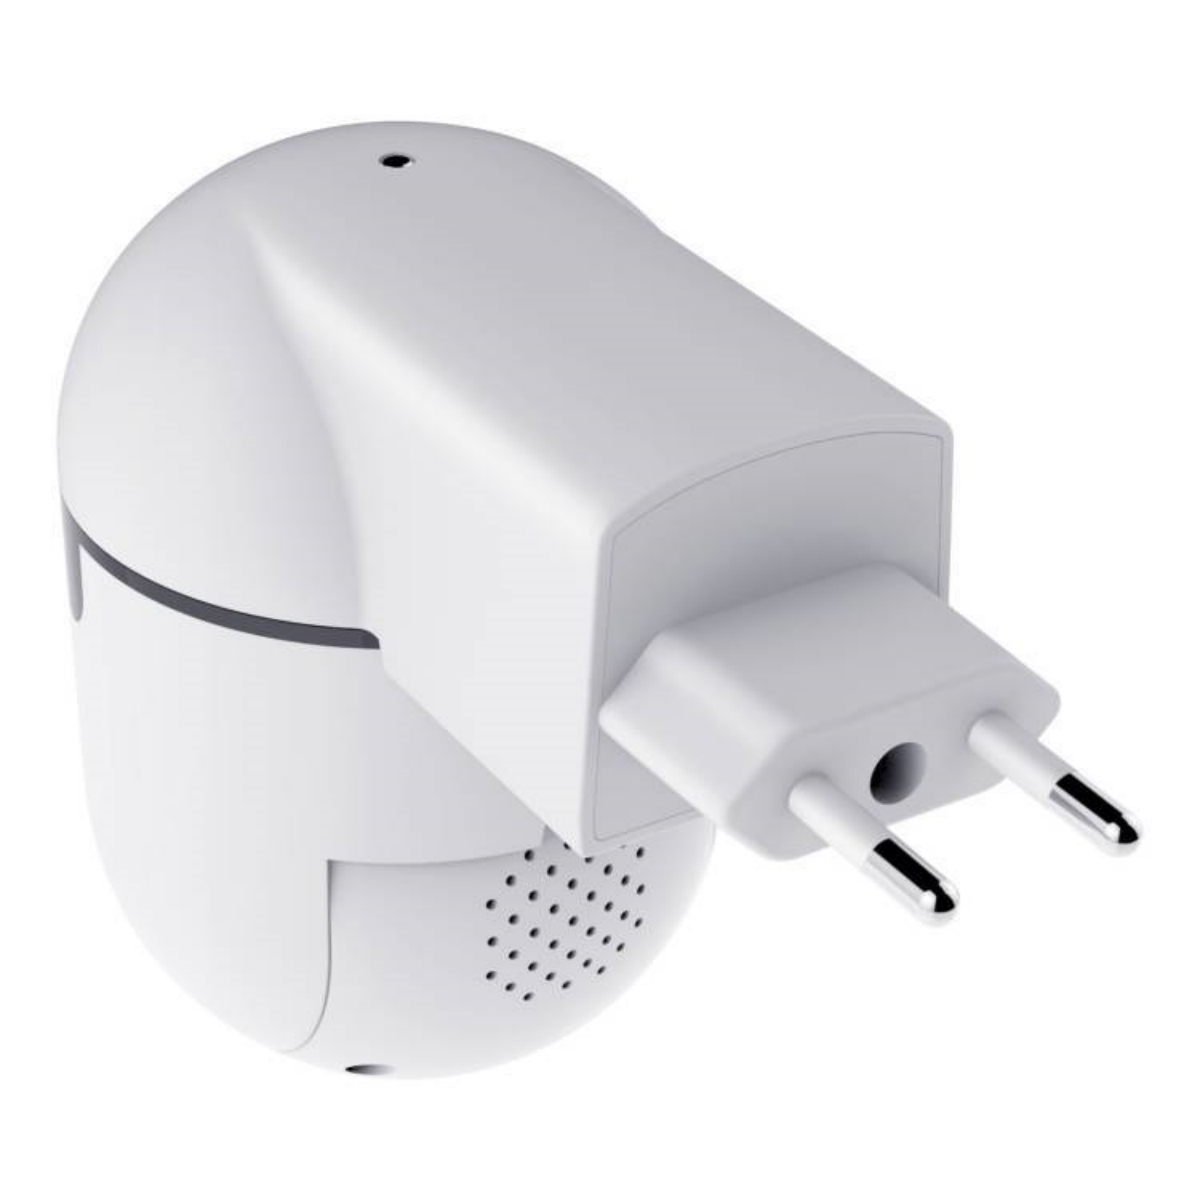 Megapixel Surveillance No-Punch Plug-in Remote 0,3 Kamera Kamera SHAOKE Direct WiFi